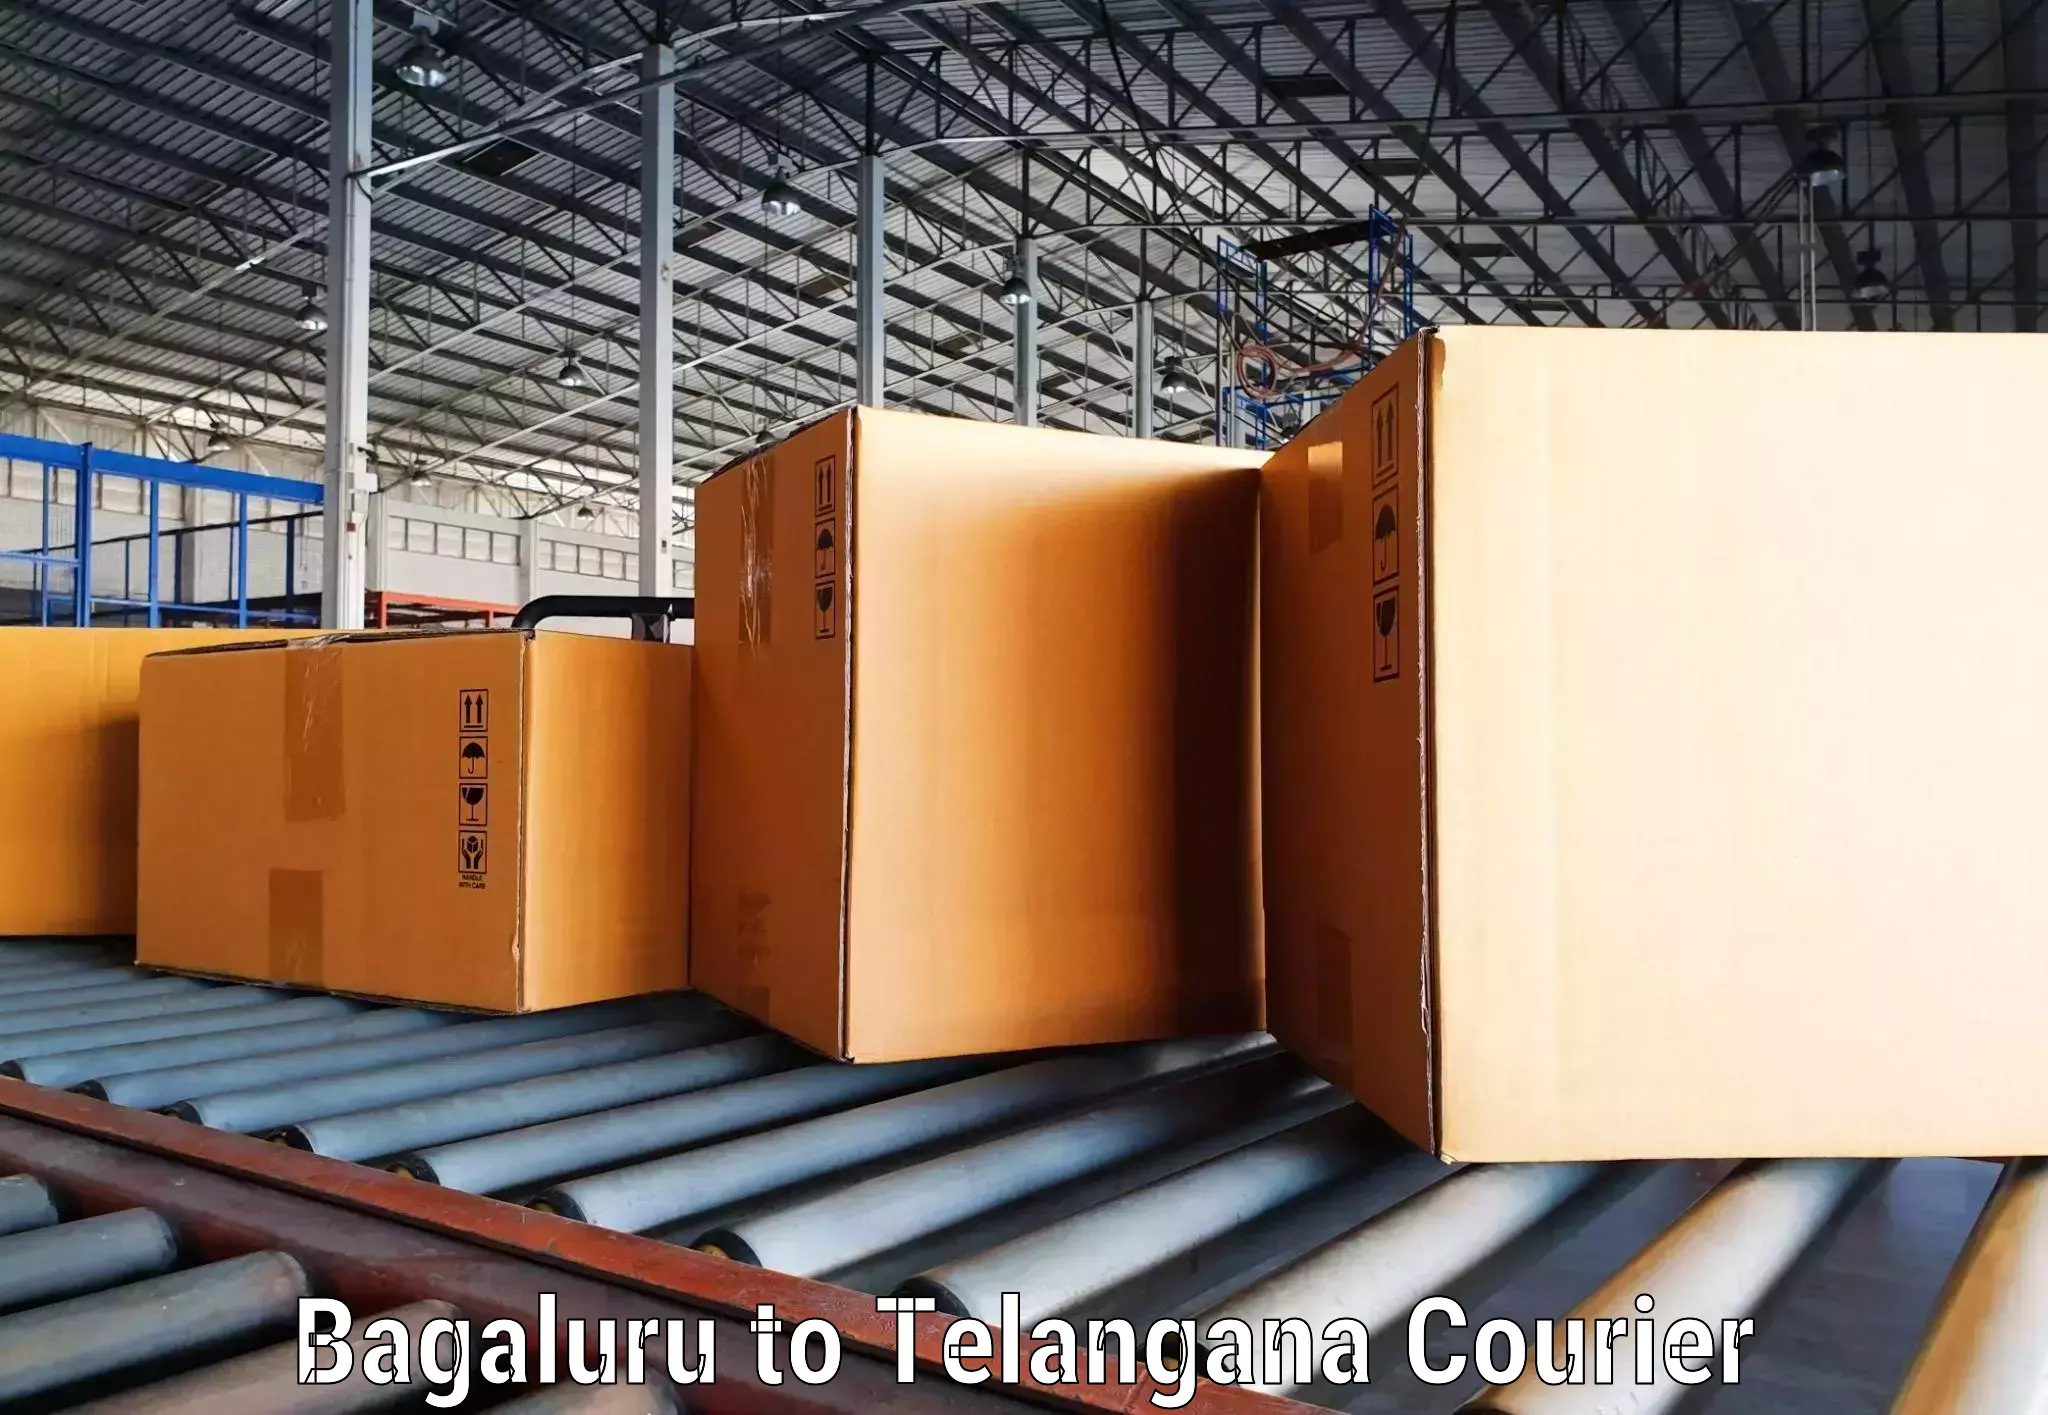 Digital courier platforms Bagaluru to Telangana